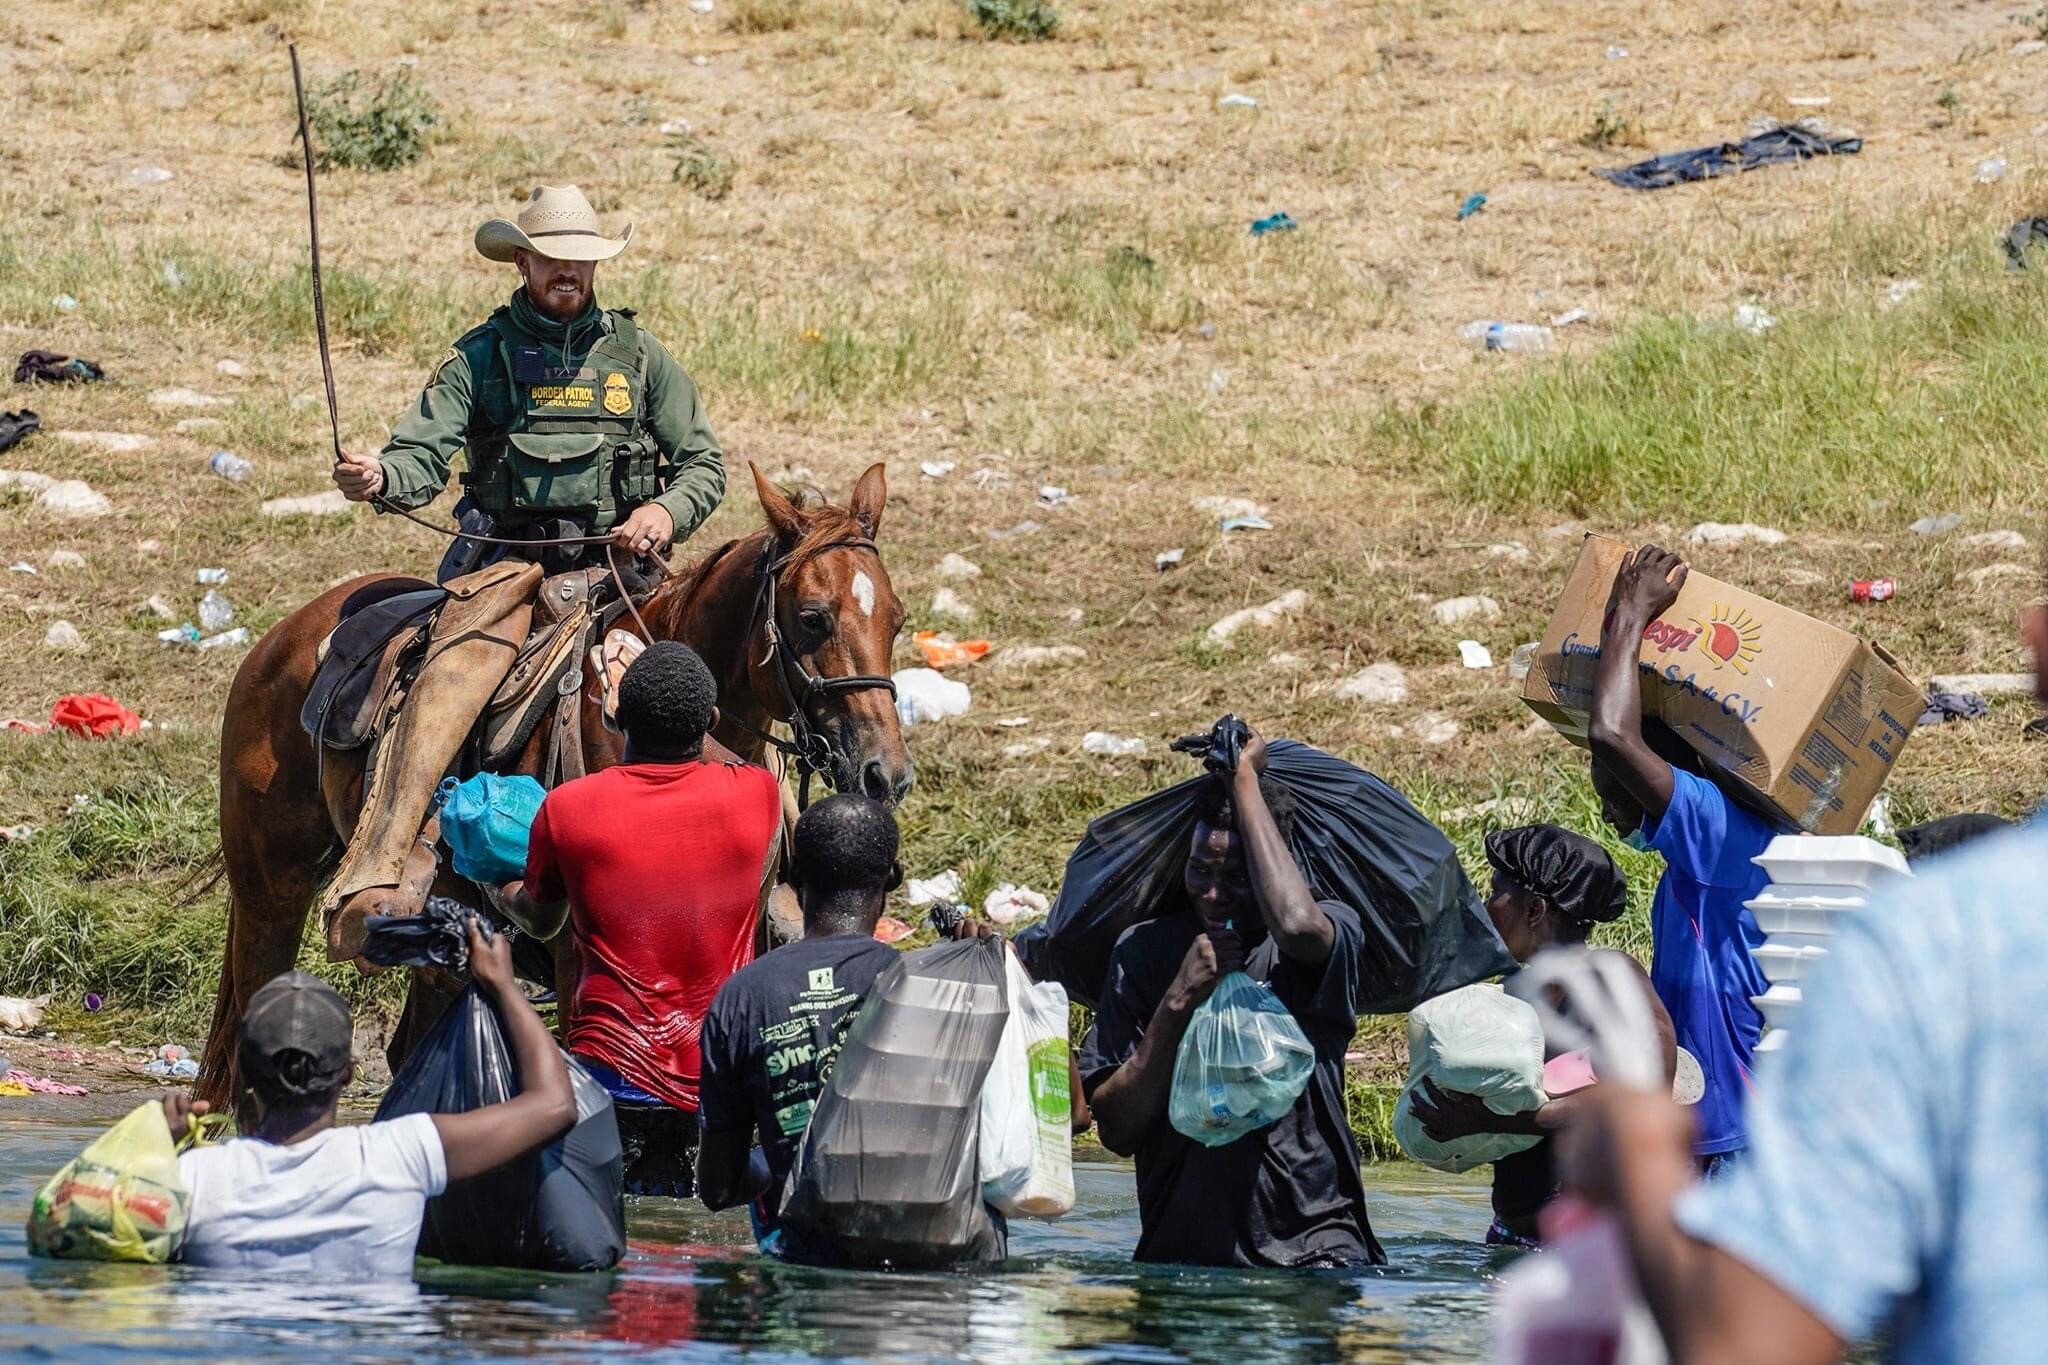 A caballo, ‘migra’ cierra frontera a migrantes haitianos